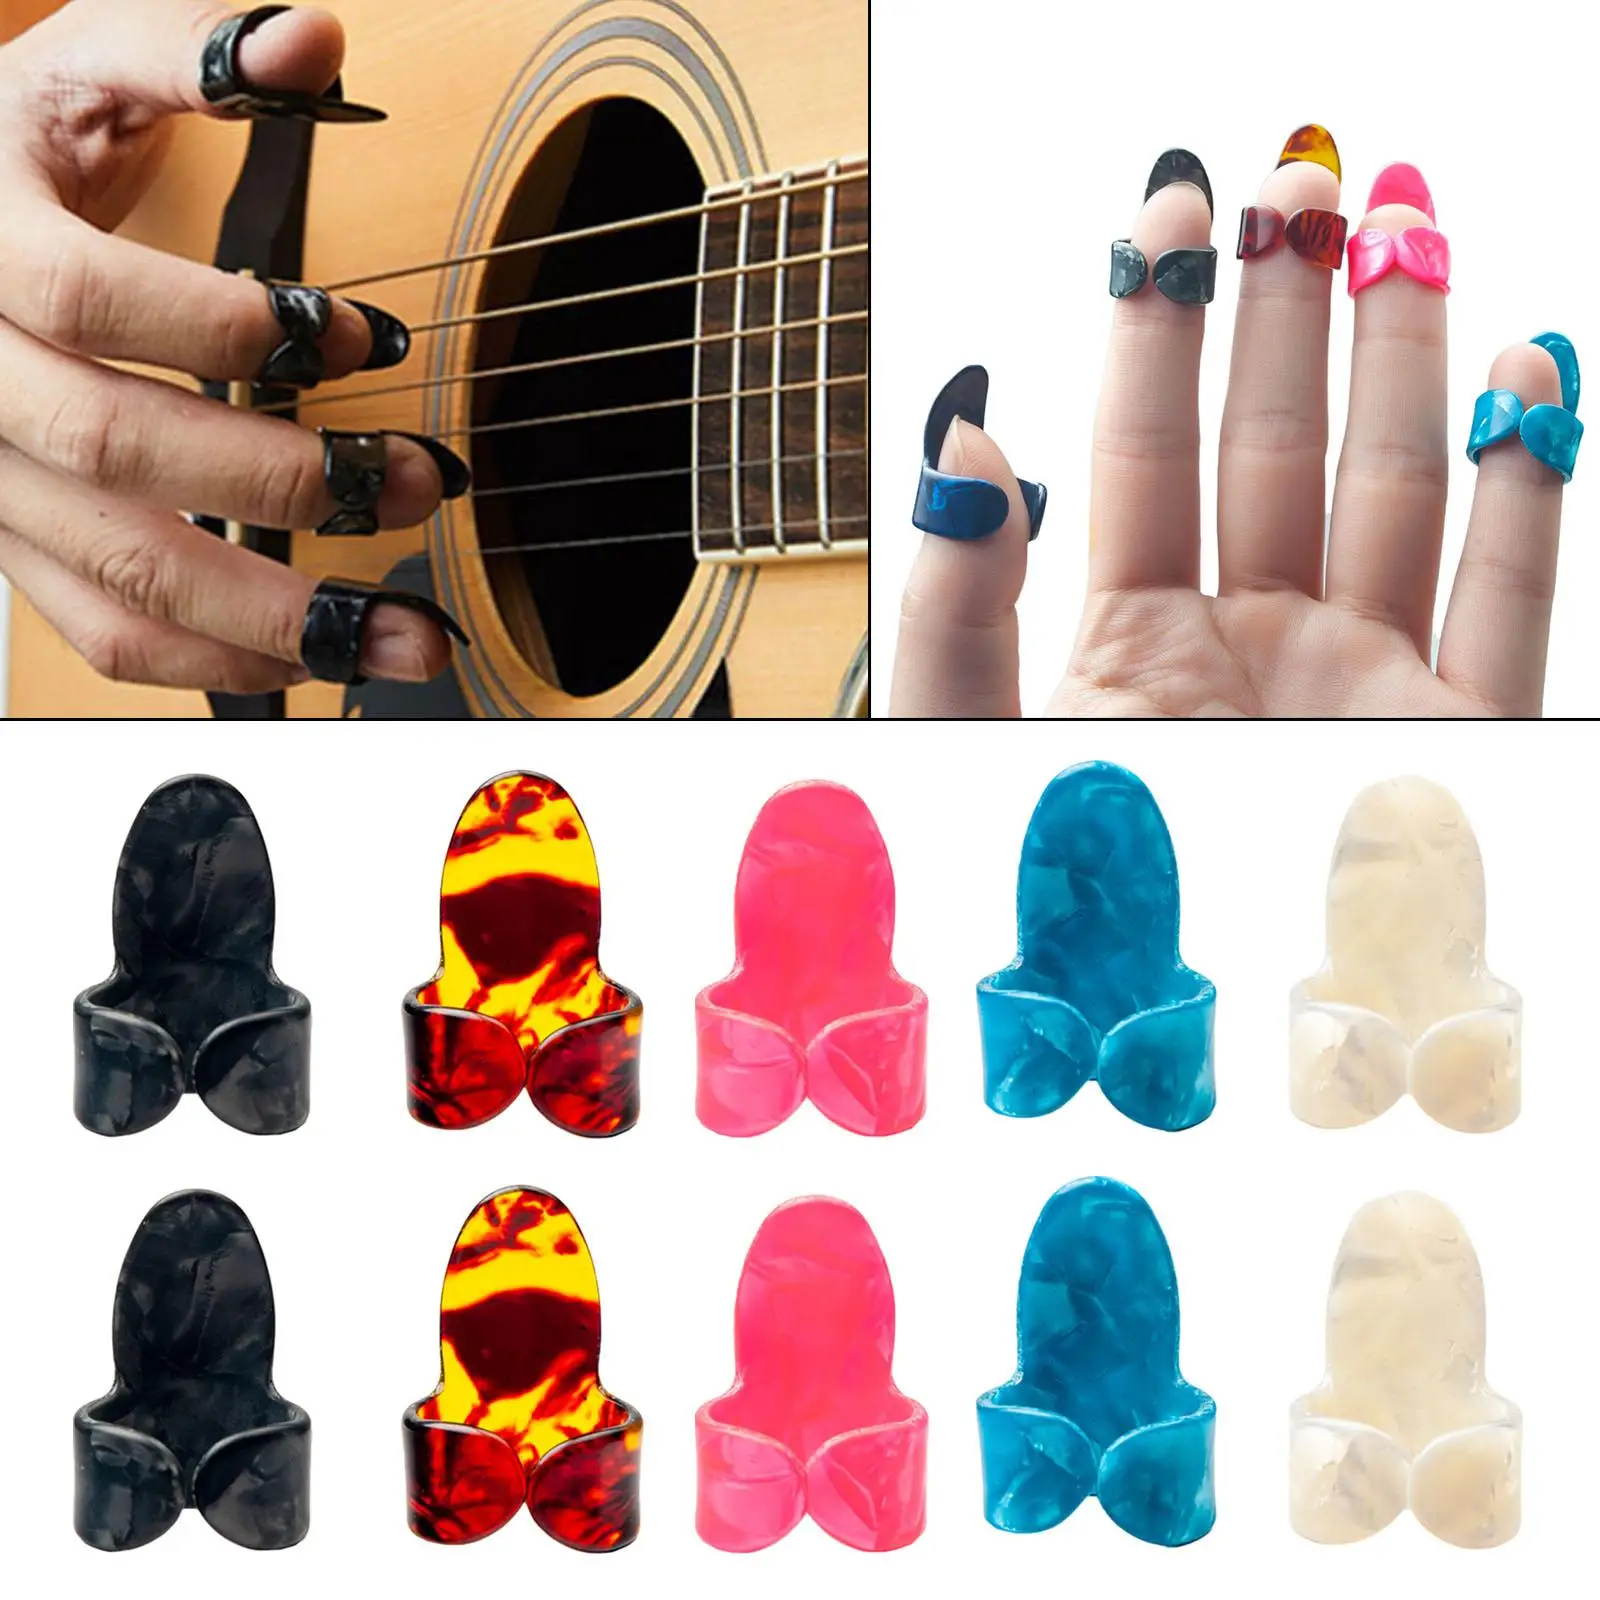 Set of 10 Professional Guitar Pick Plectrums Fingertips Protector Thumb Finger Picks for Acoustic,Electric, Classic Guitar Banjo